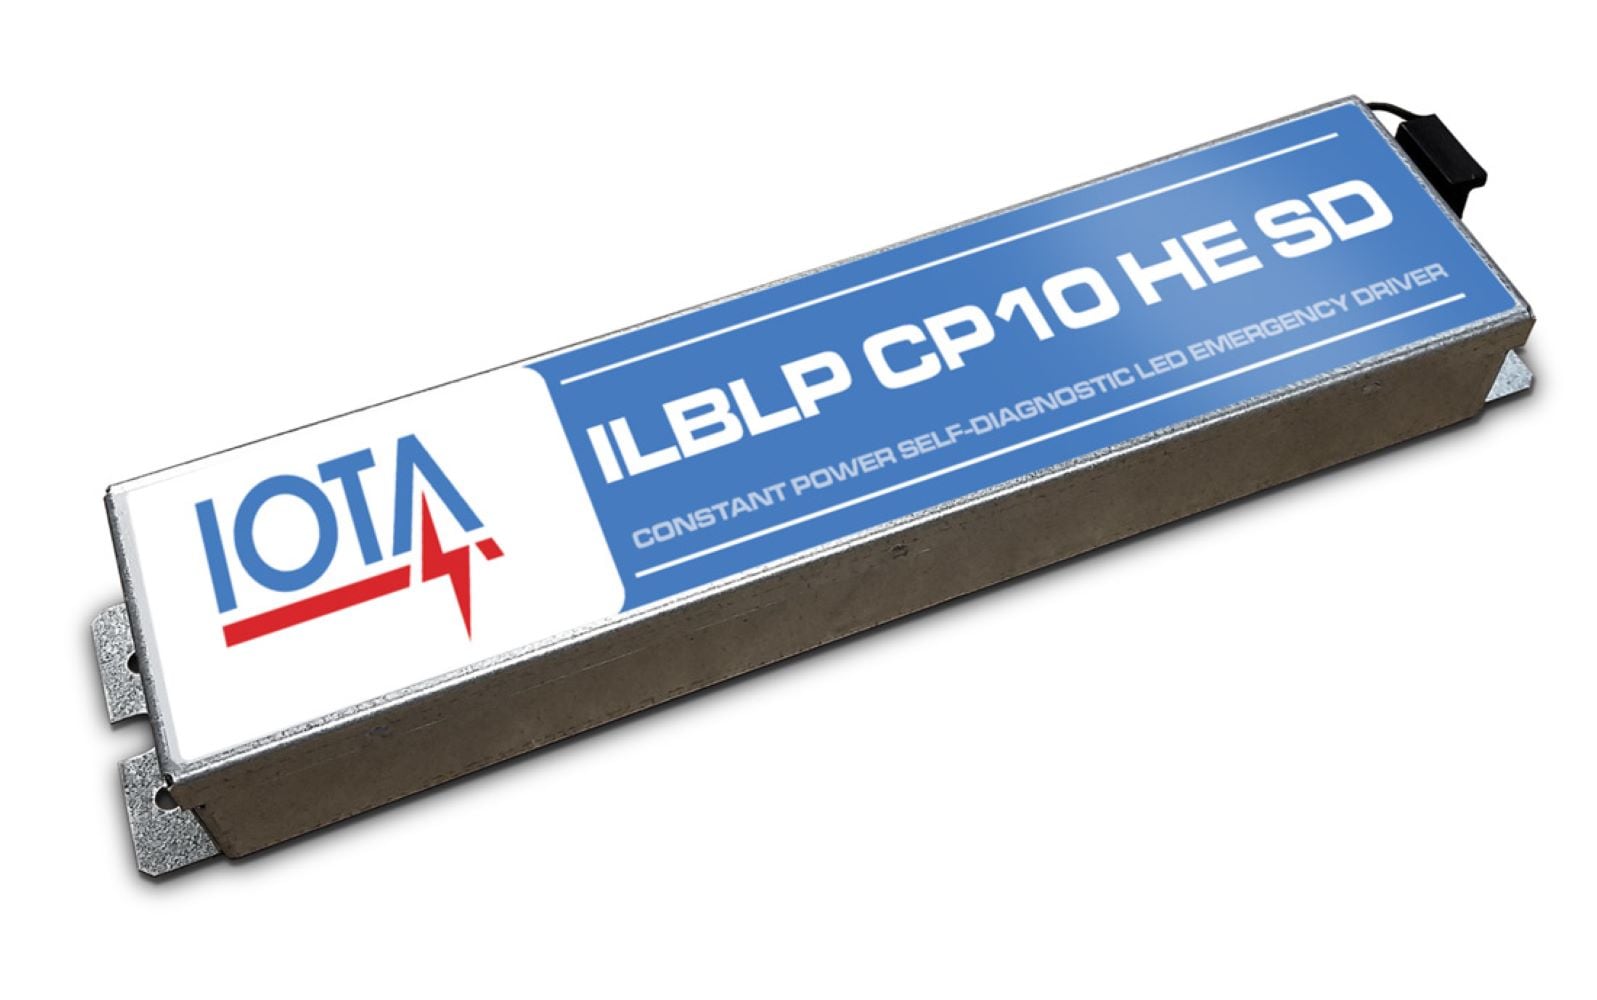 IOTA Nickel Cadmium (Nicd) Emergency Lighting Battery Pack in the